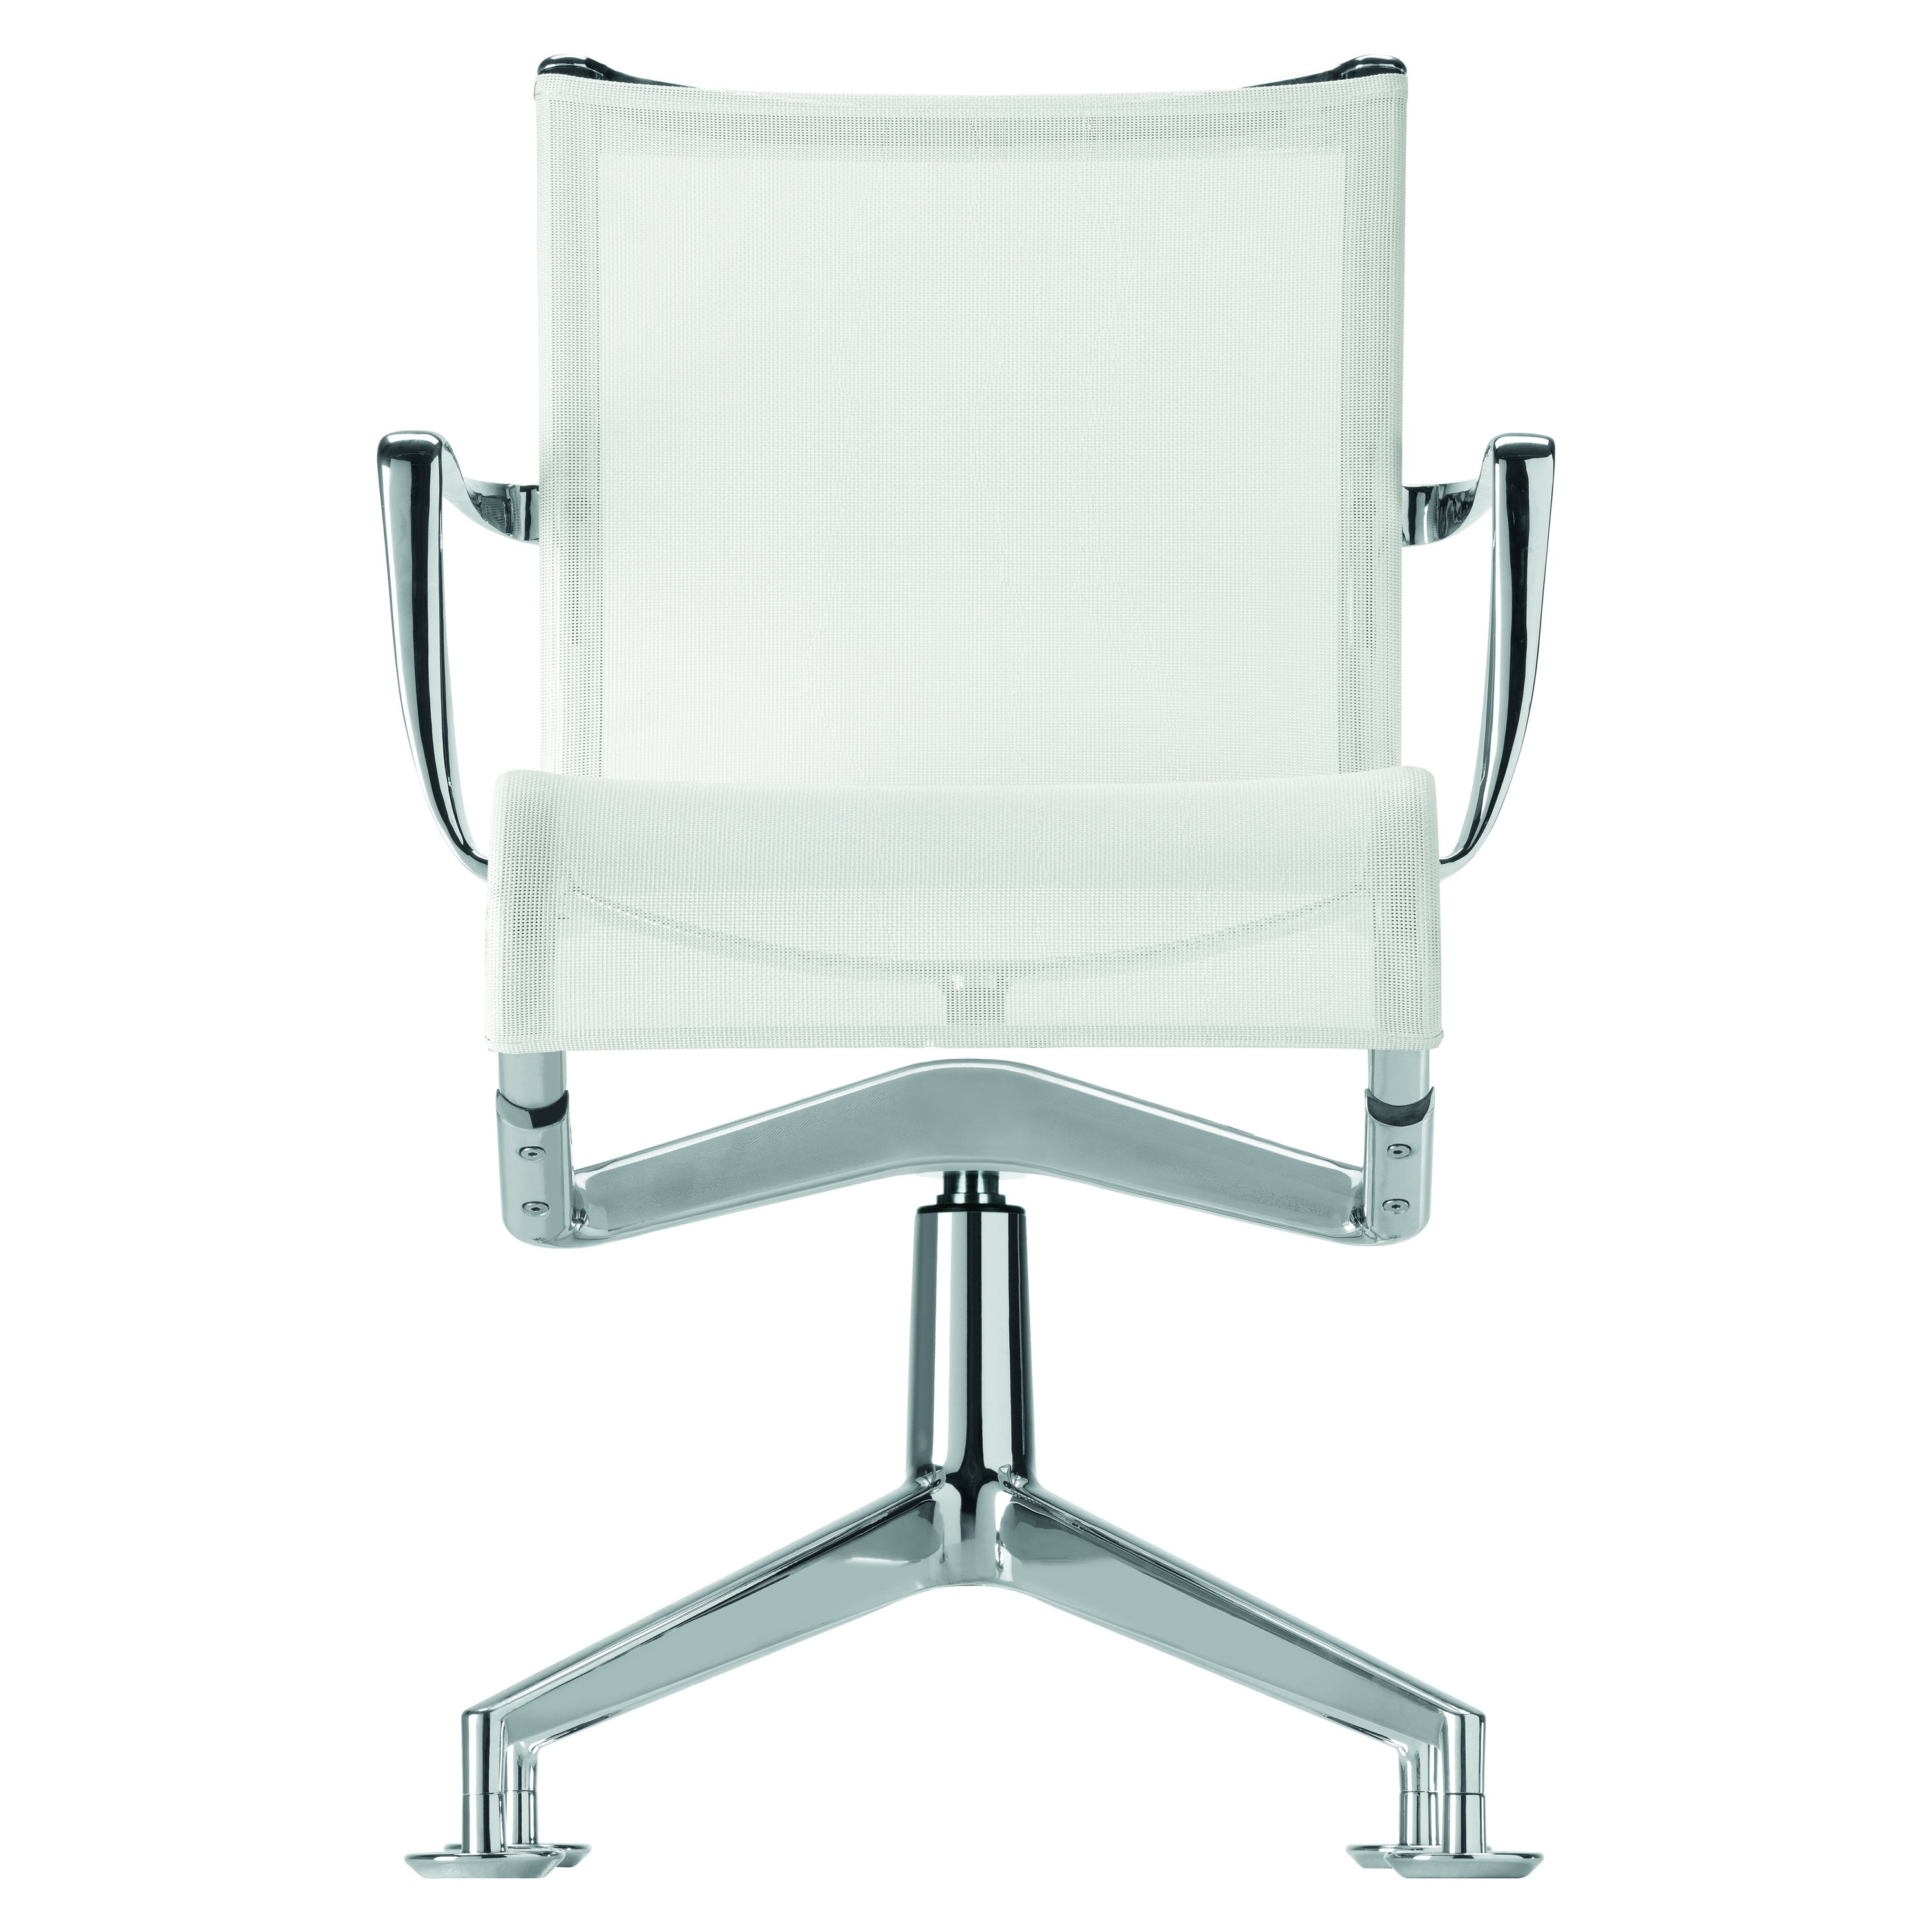 Alias 437 Meetingframe 44 Chair in White Mesh with Chromed Aluminum Frame